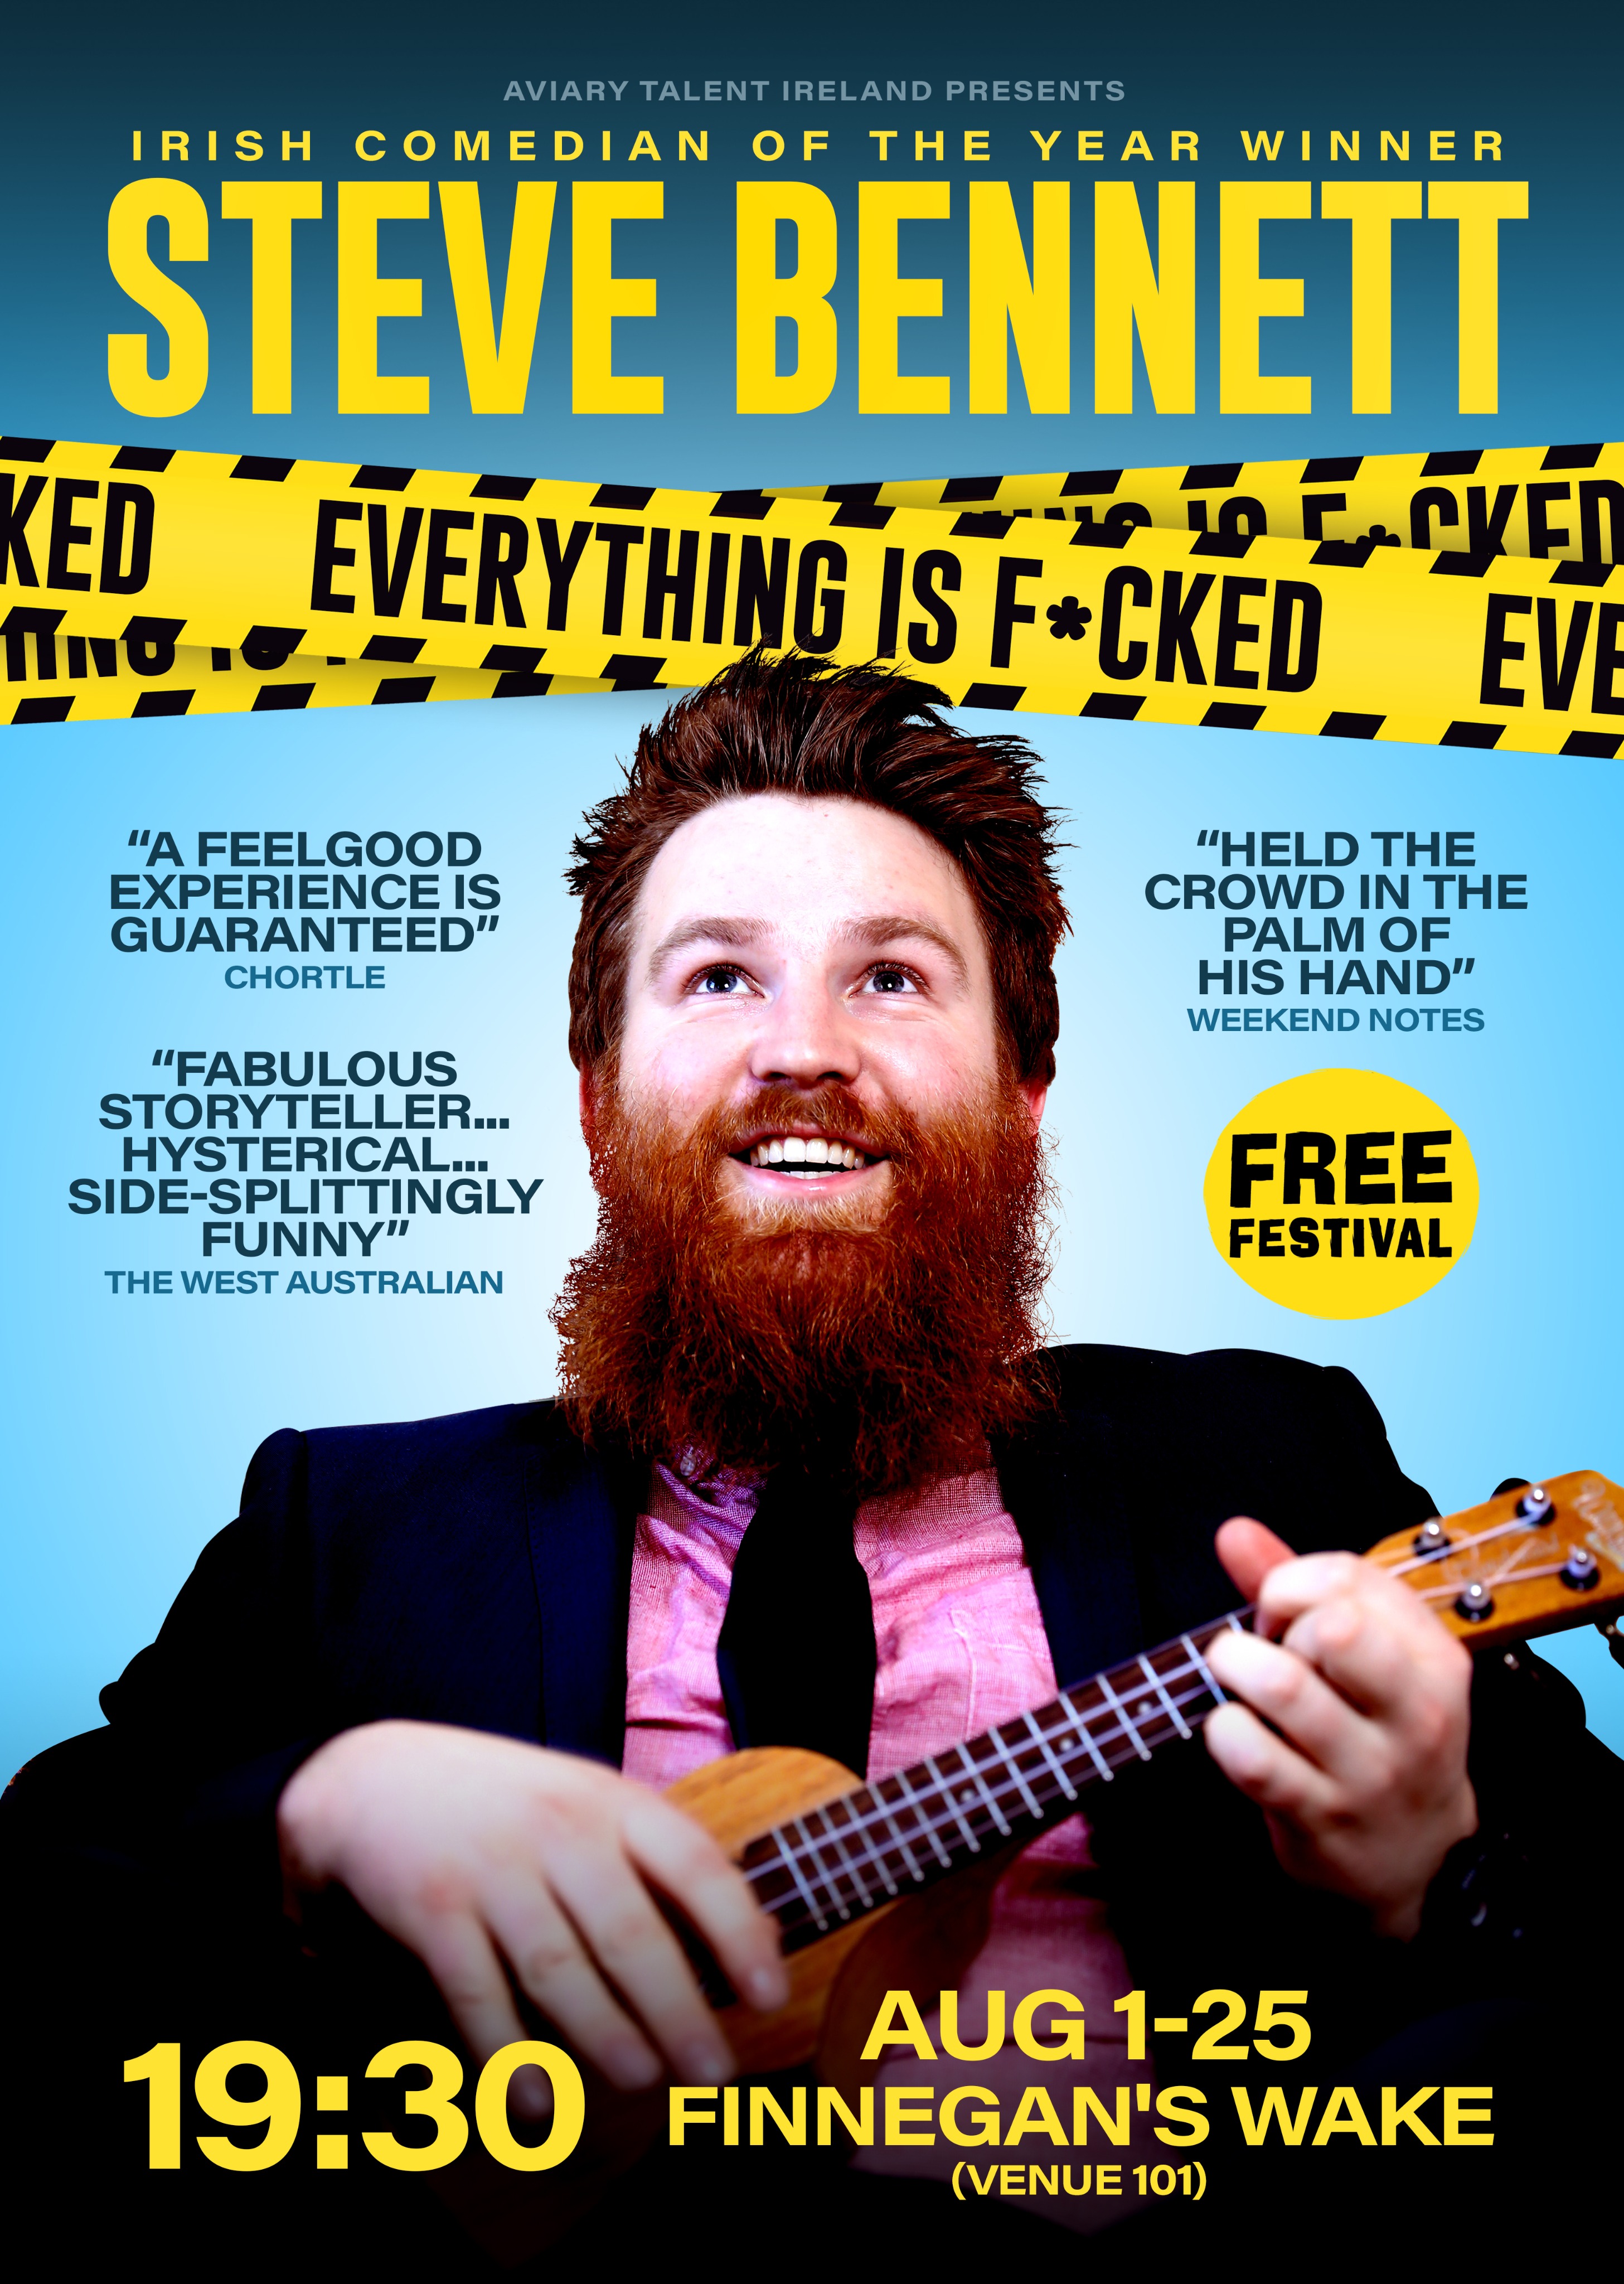 The poster for Steve Bennett - Everything is F*cked